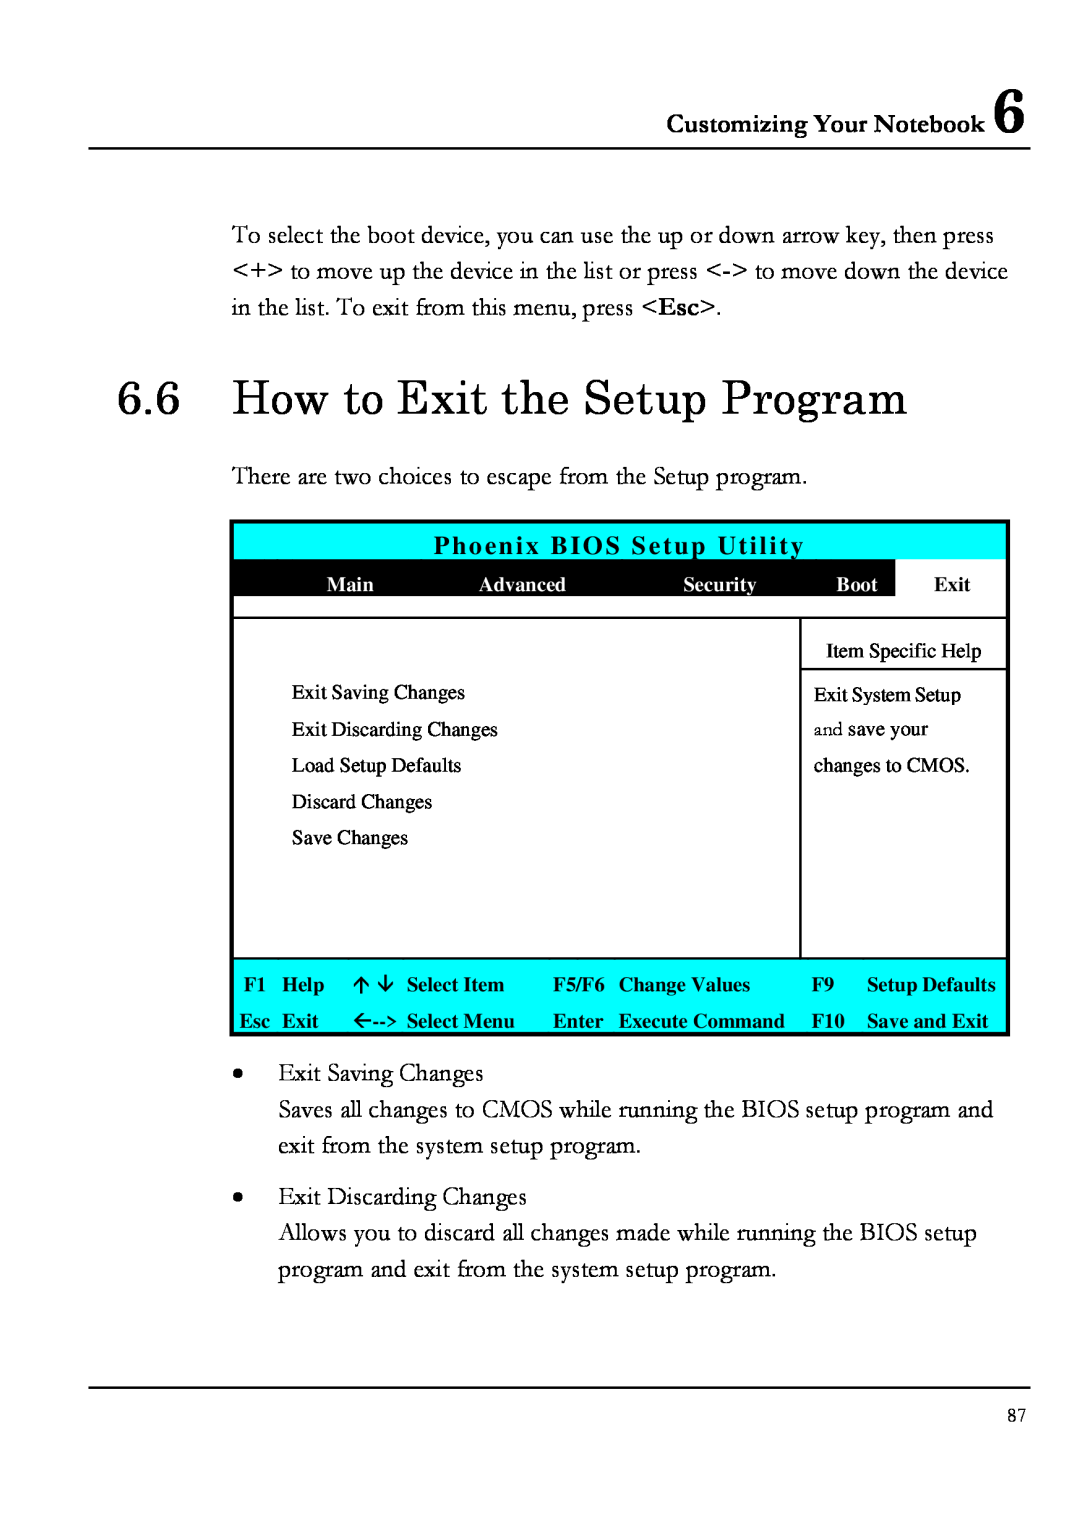 Everex NM3900W, NM4100W, NM3700W manual How to Exit the Setup Program, Customizing Your Notebook, Phoenix BIOS Setup Utility 